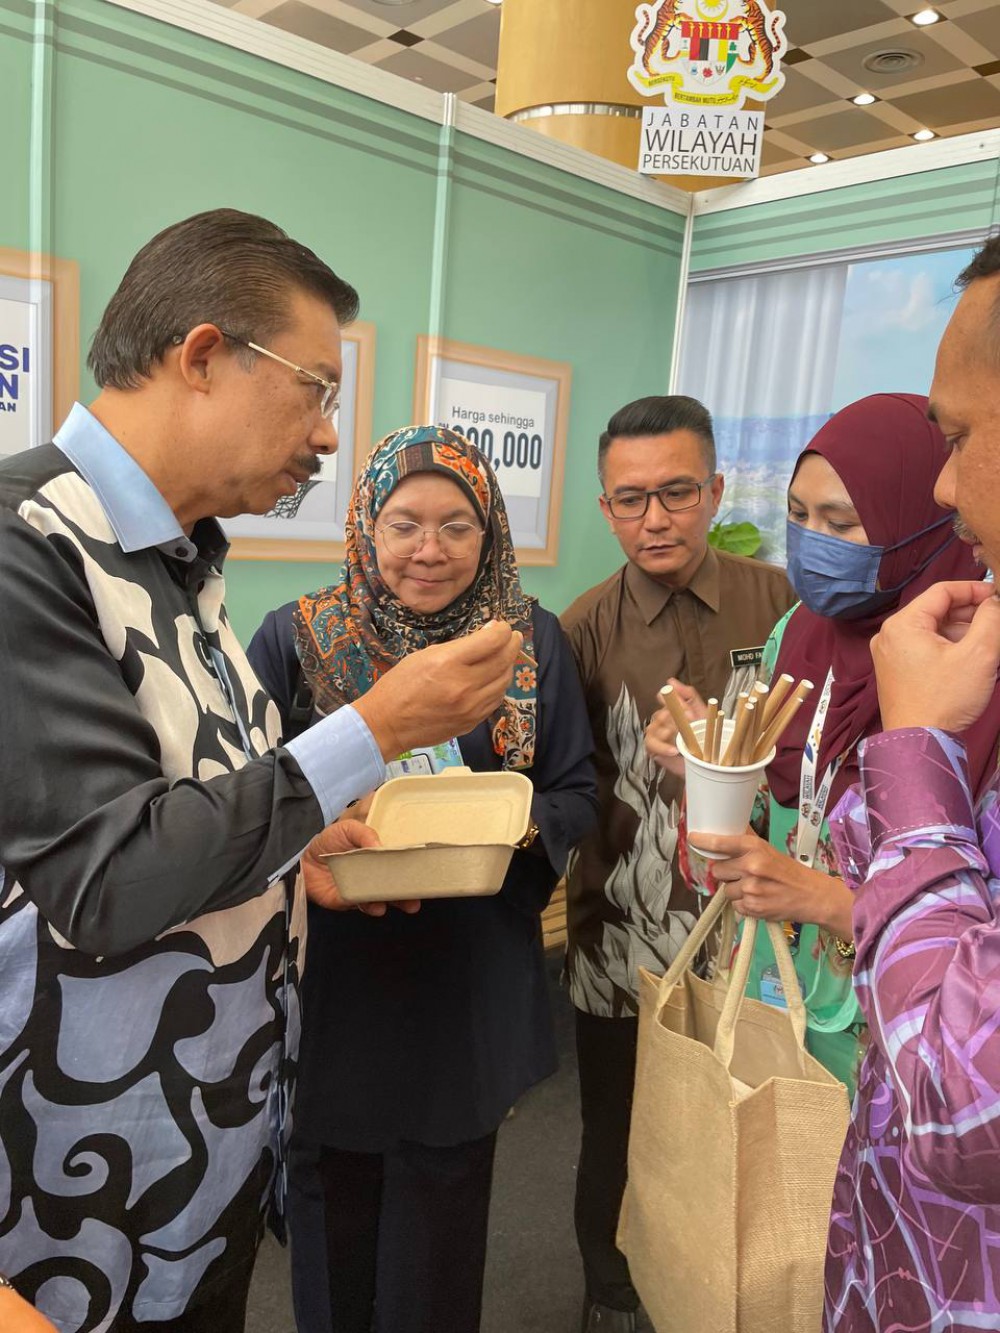 Pameran, Kuiz dan Survey Berkaitan Penggunaan Produk Biodegradasi  di Putrajaya Open Day